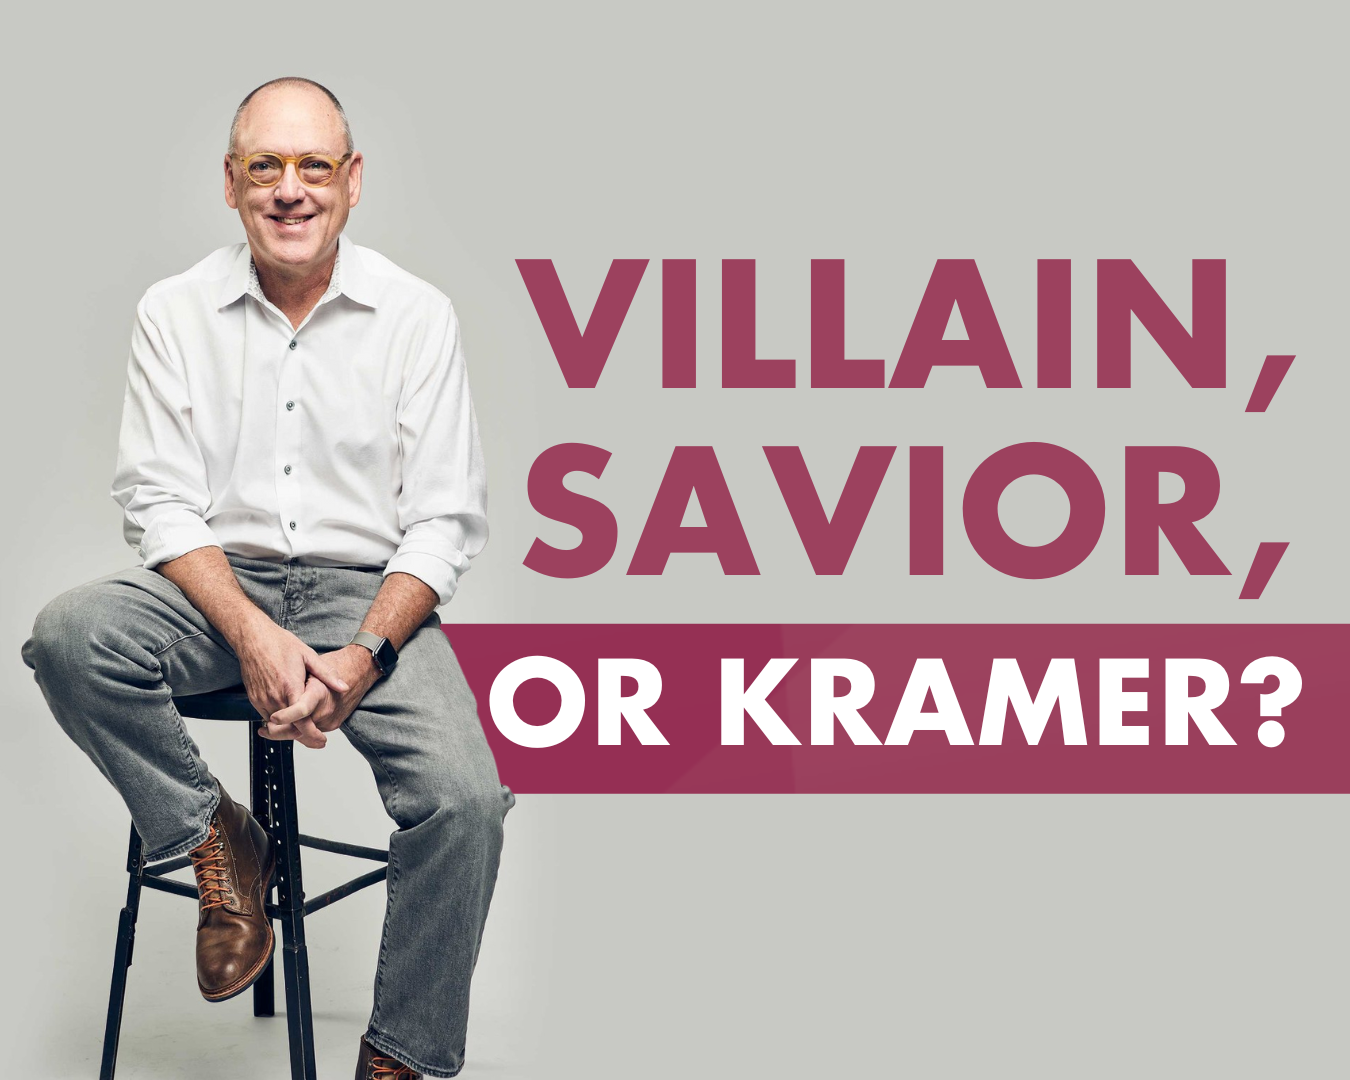 Villain, Savior, or Kramer?